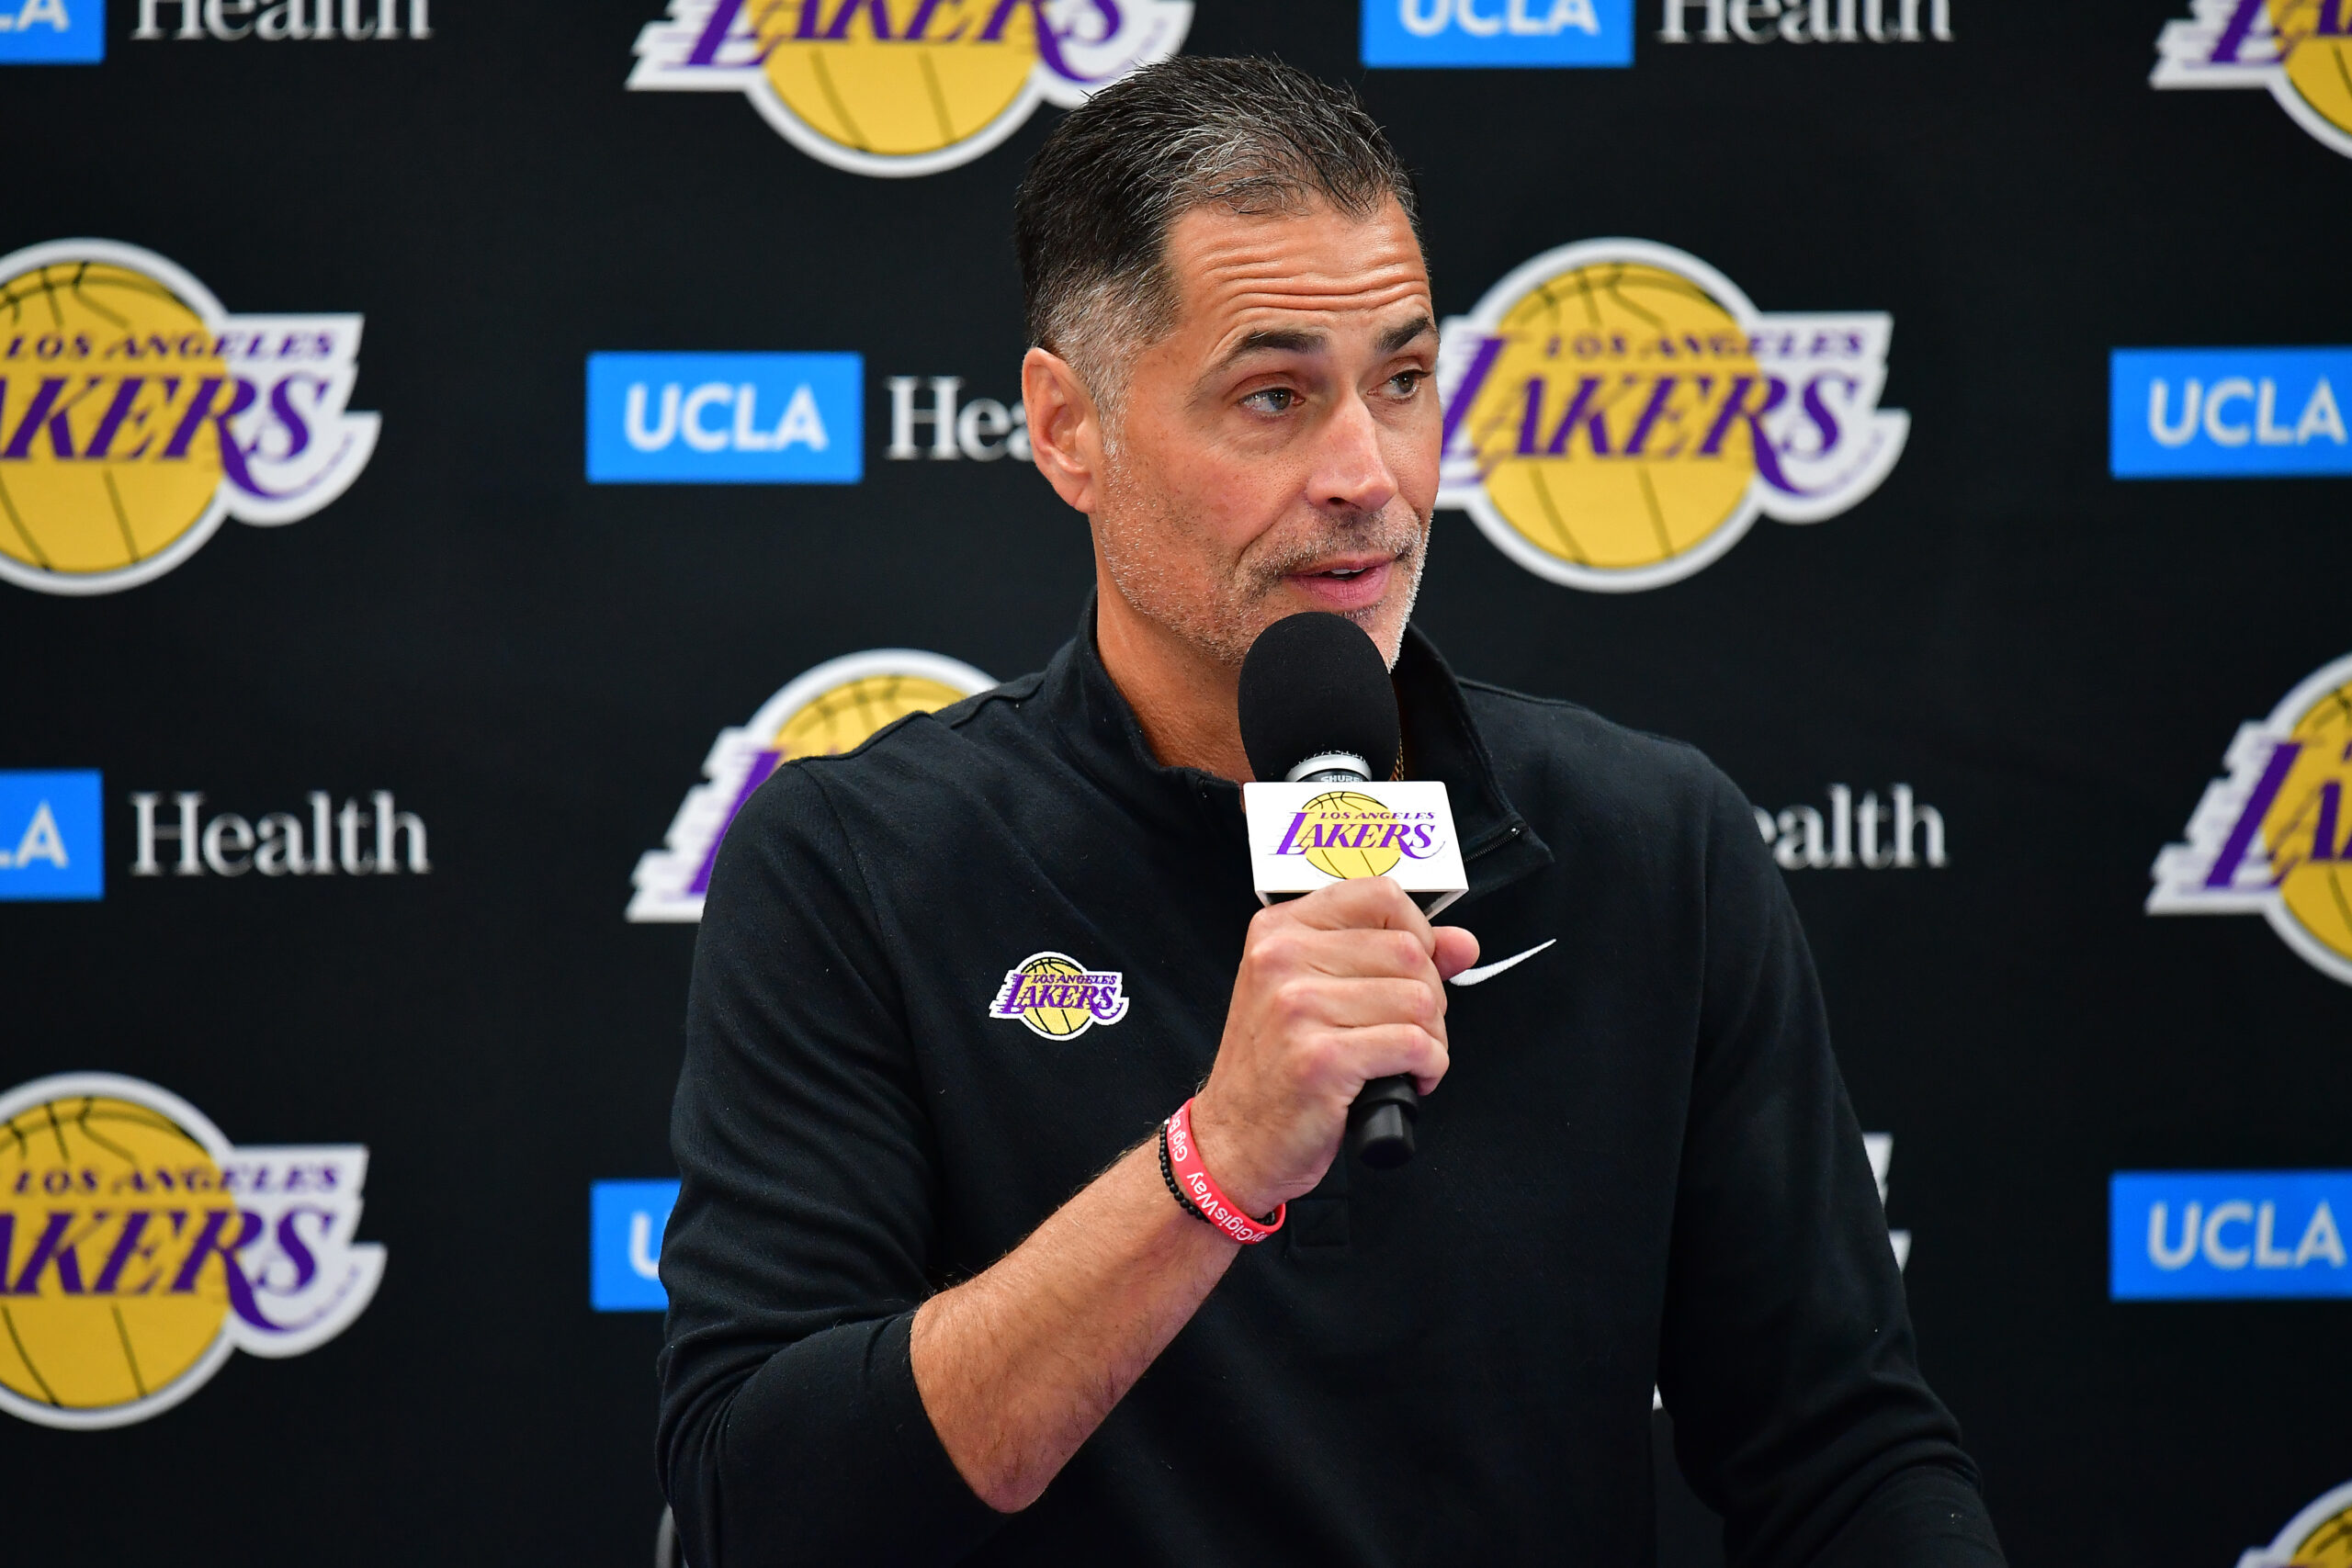 Los Angeles Lakers executive Rob Pelinka